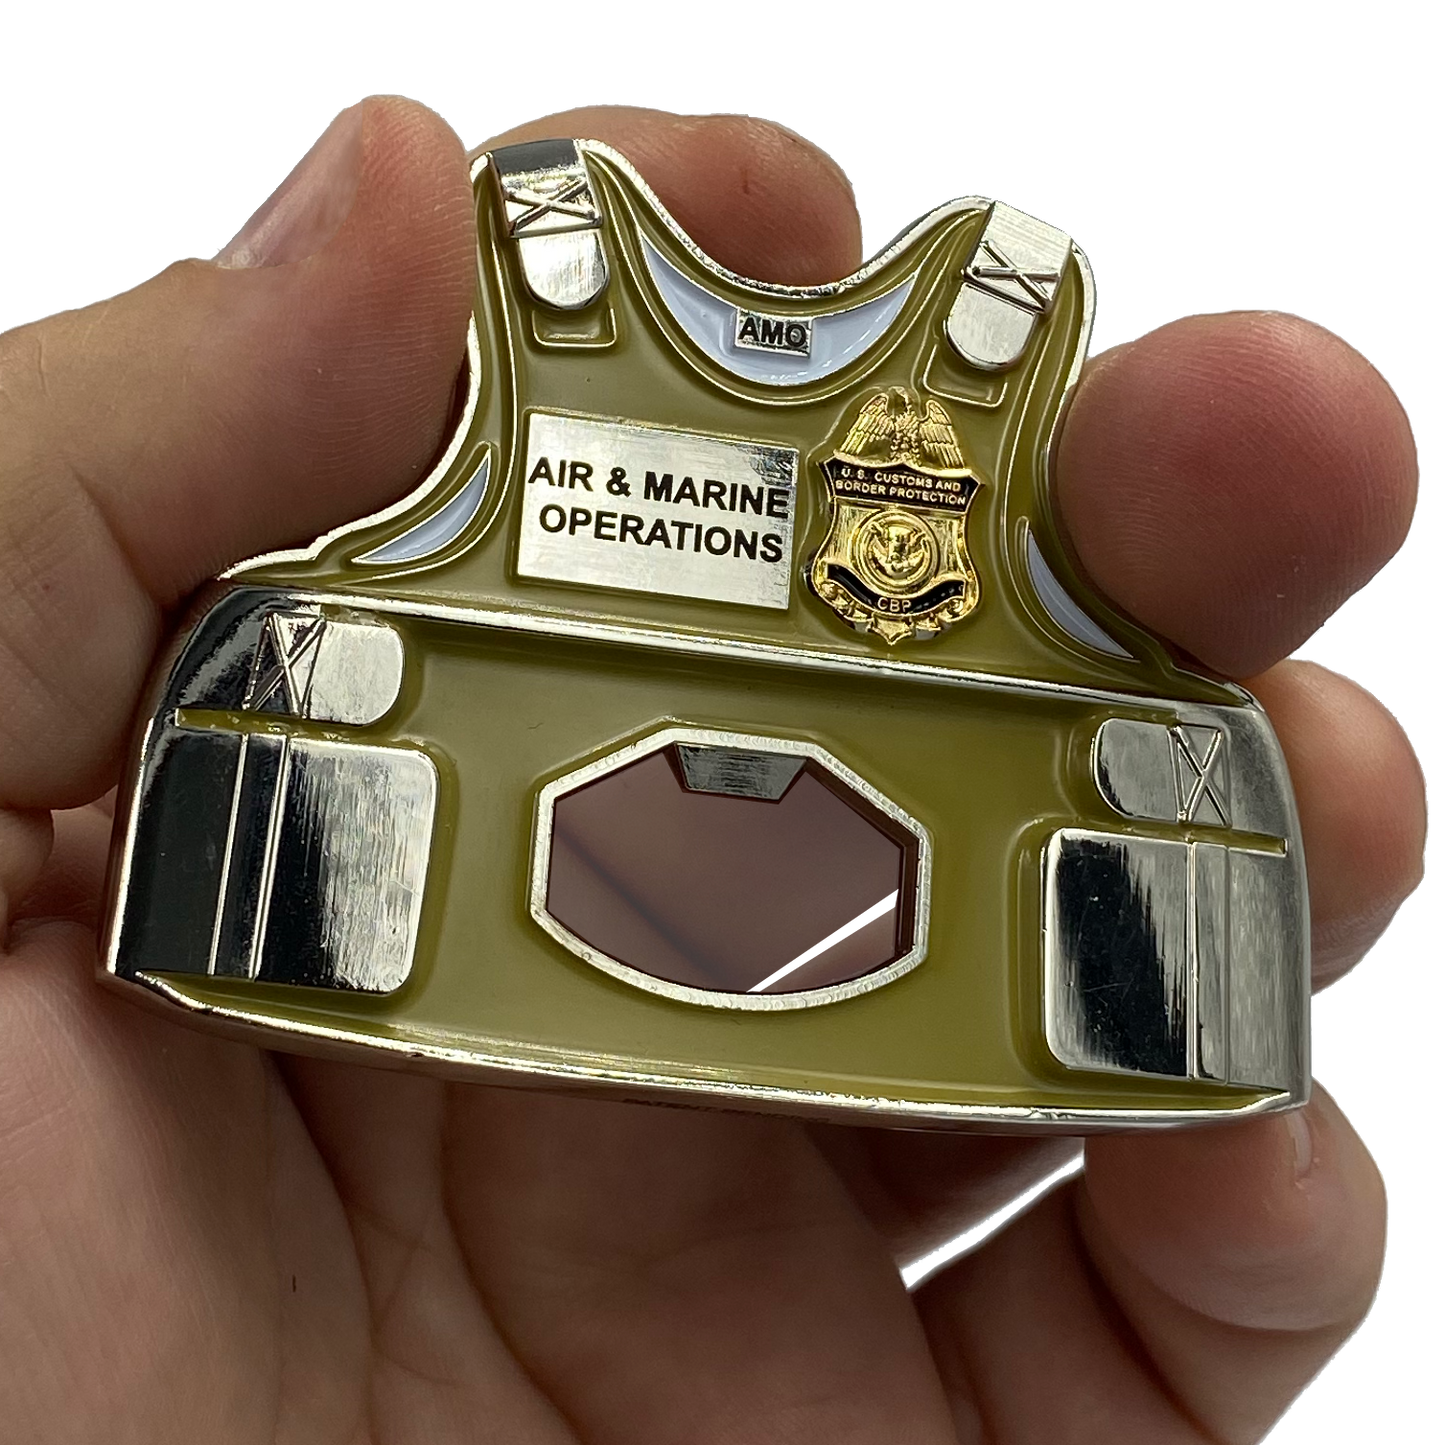 EL2-014 AMO Air and Marine CBP Bottle Opener Body Armor Ballistic Vest Challenge Coin Air & Marine Interdiction Agent